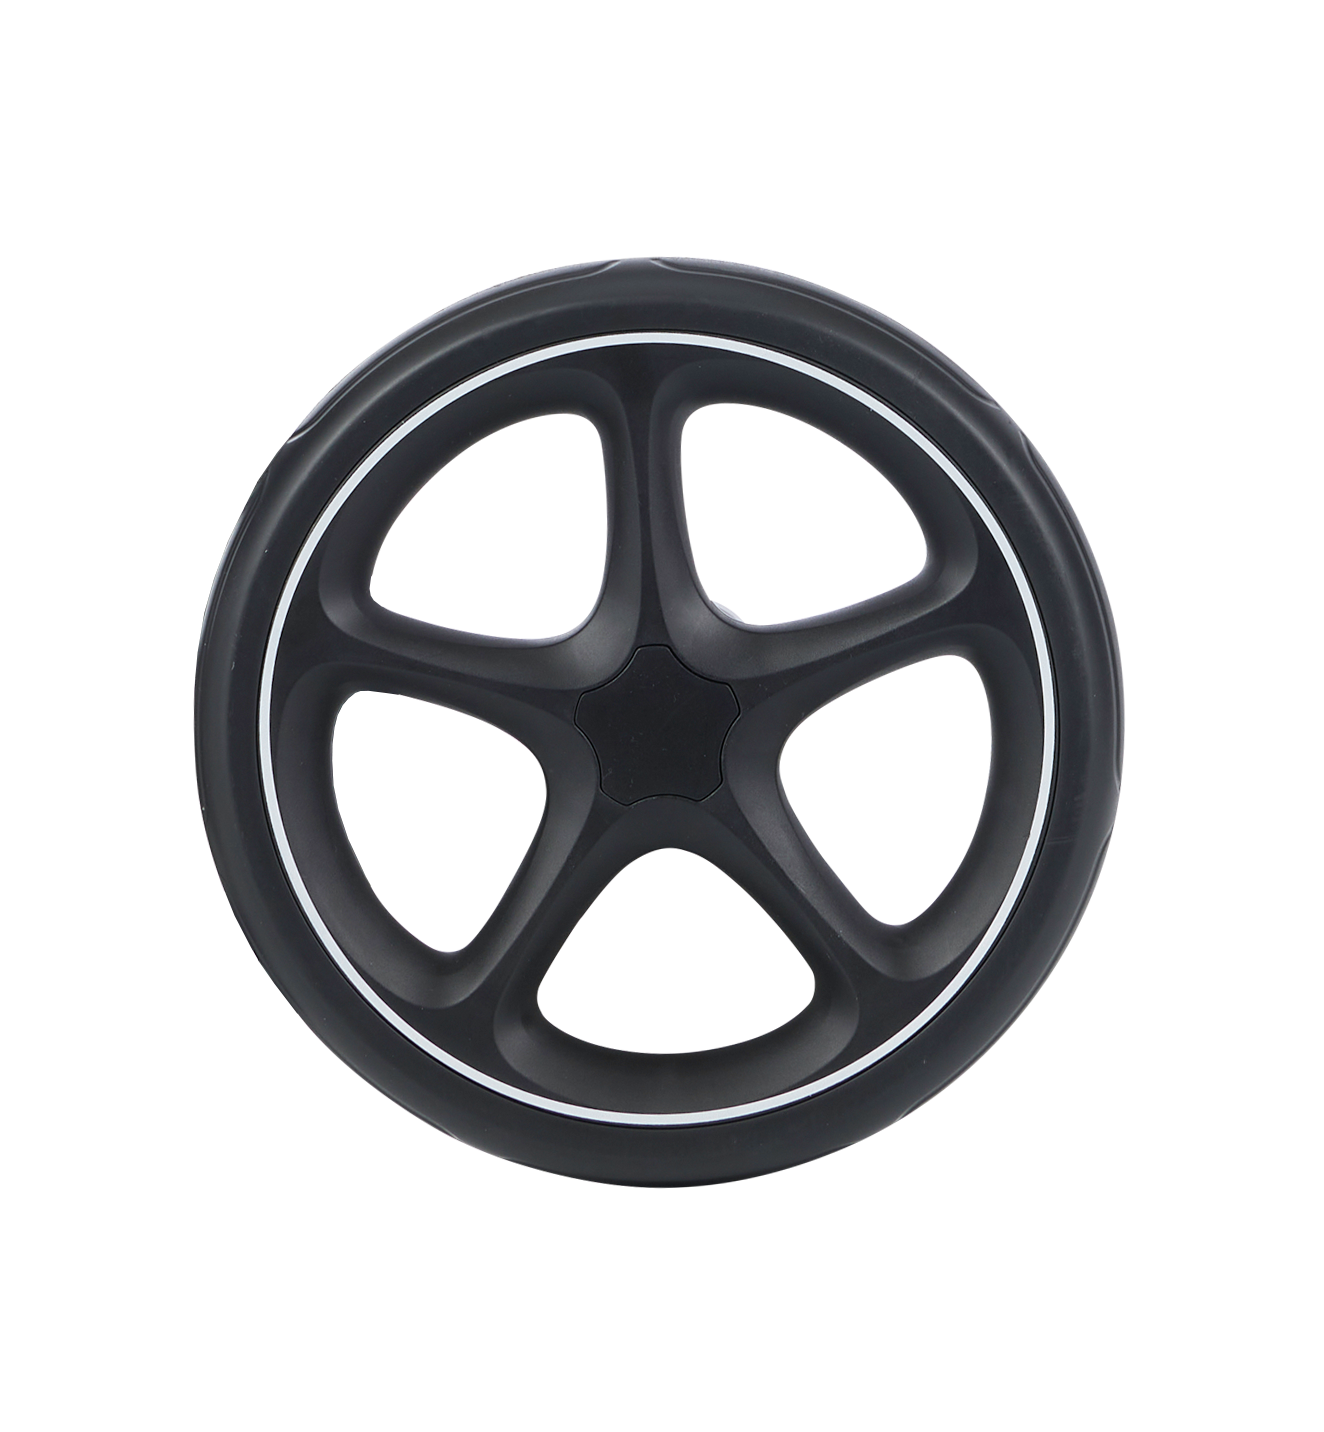 Rear wheel including wheel axle | Harvey⁵ and Harvey⁵ Premium